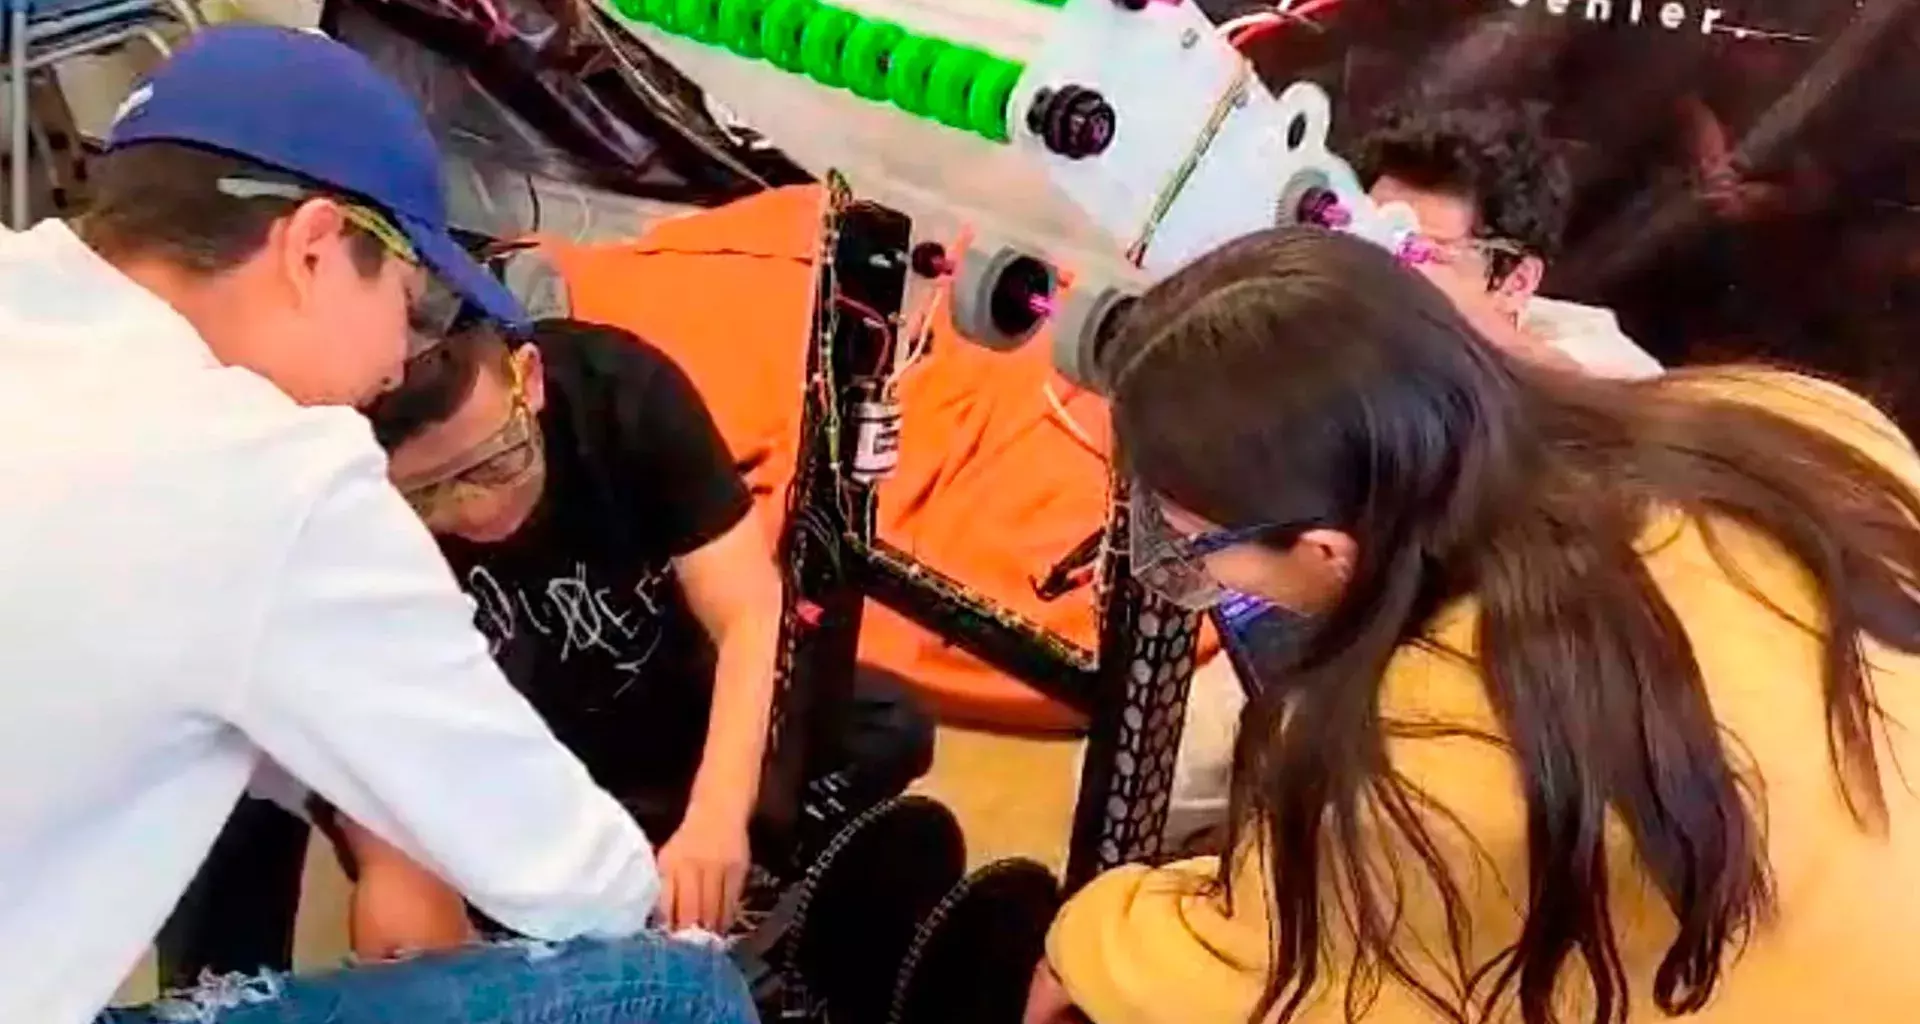 Equipo robótica de PrepaTec Santa Anita, stingbots, se prepara para certamen FIRST.